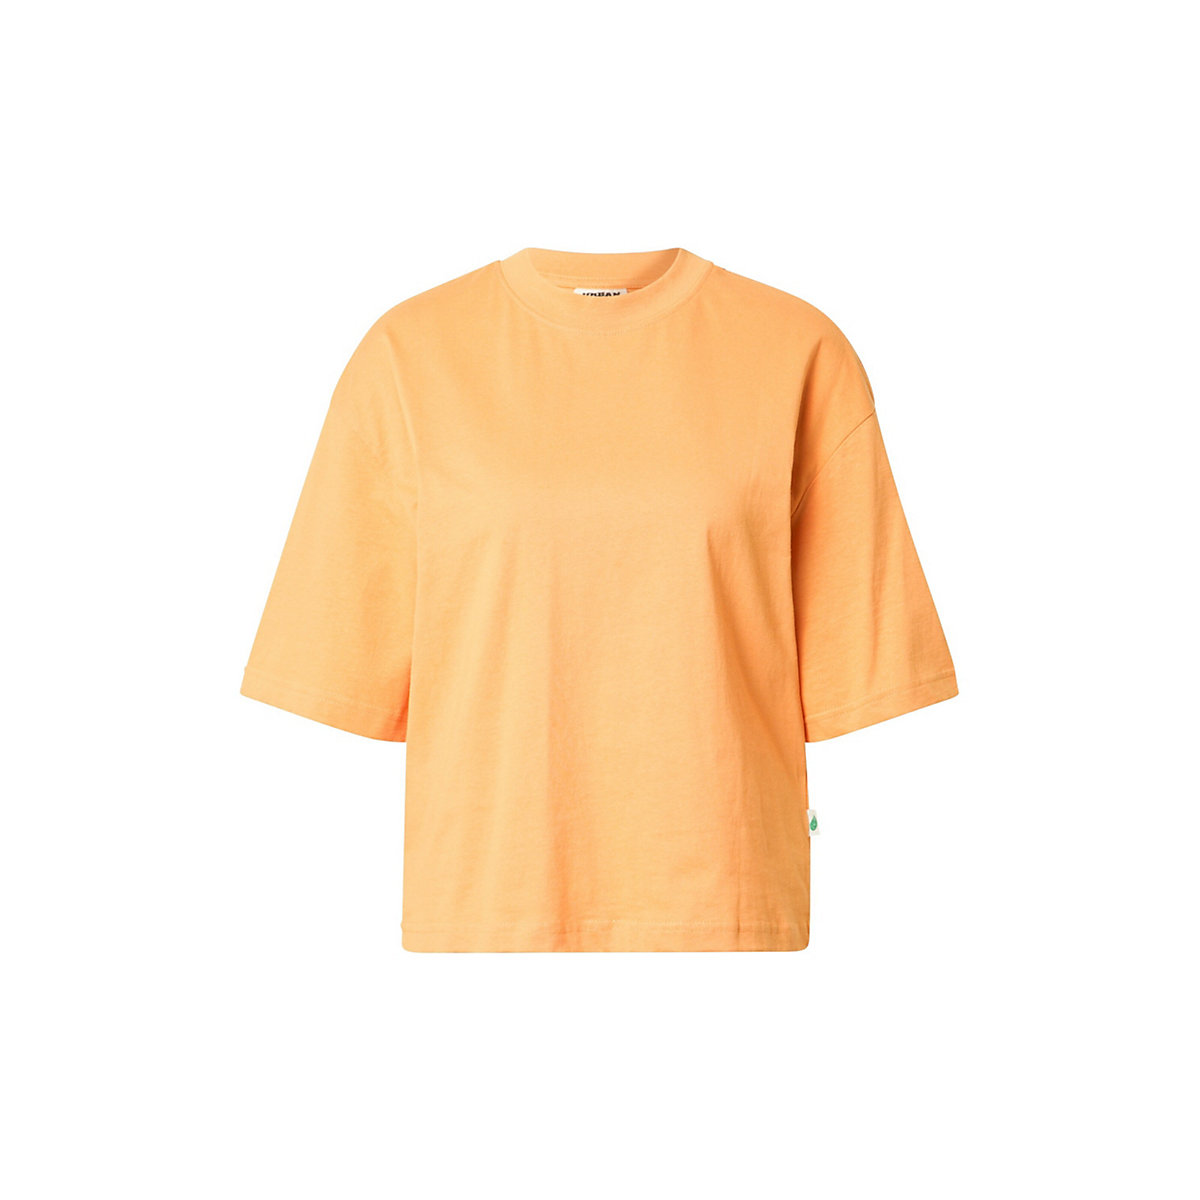 Urban Classics Shirt orange